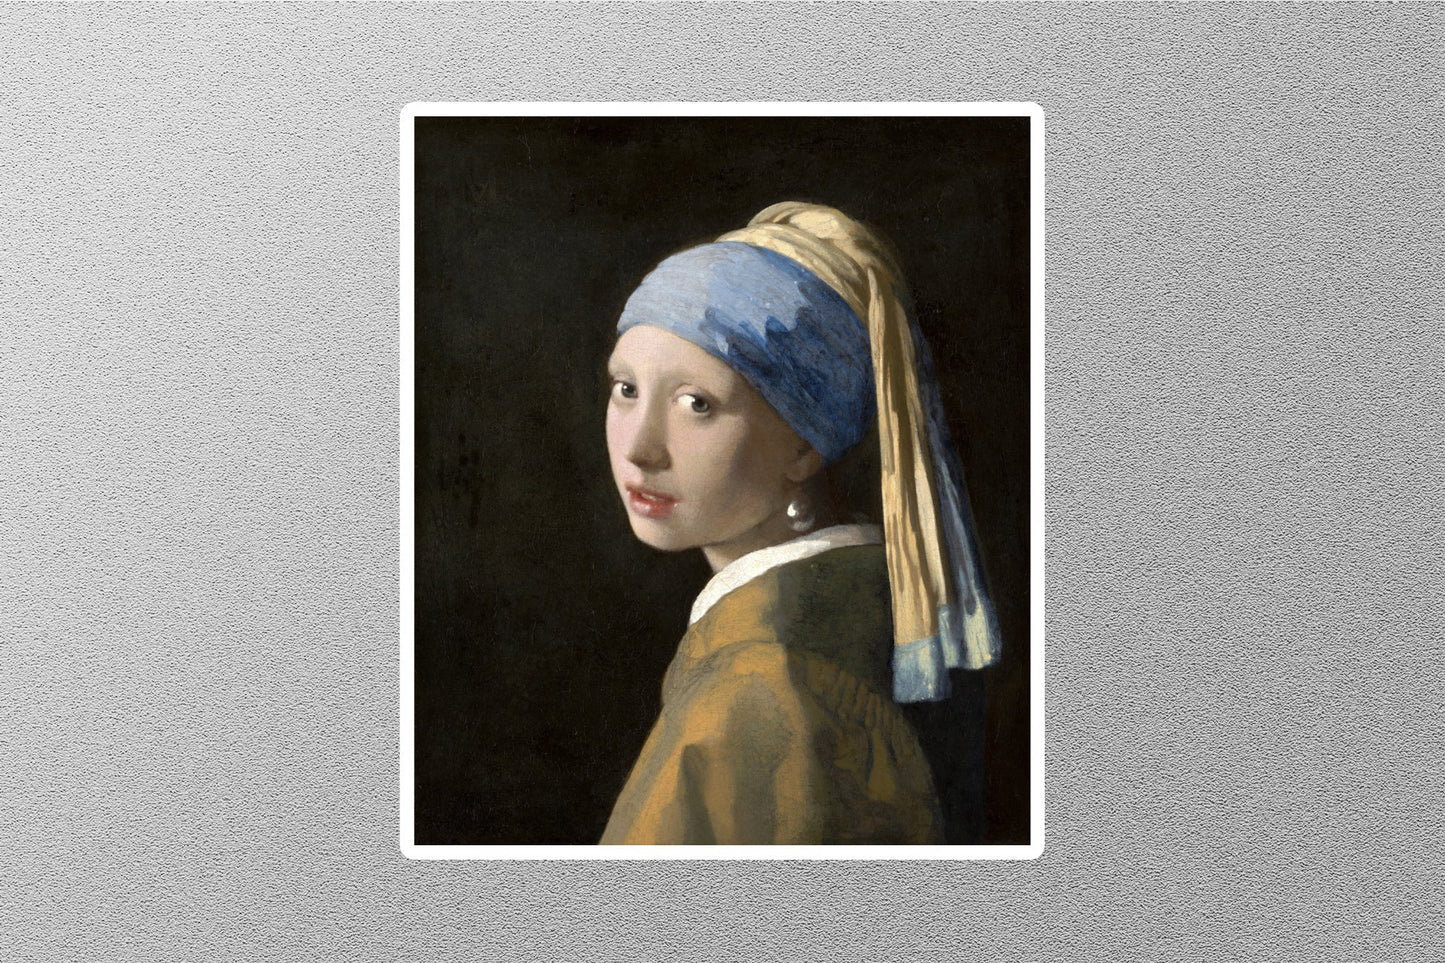 Vermeer Girl Art Sticker